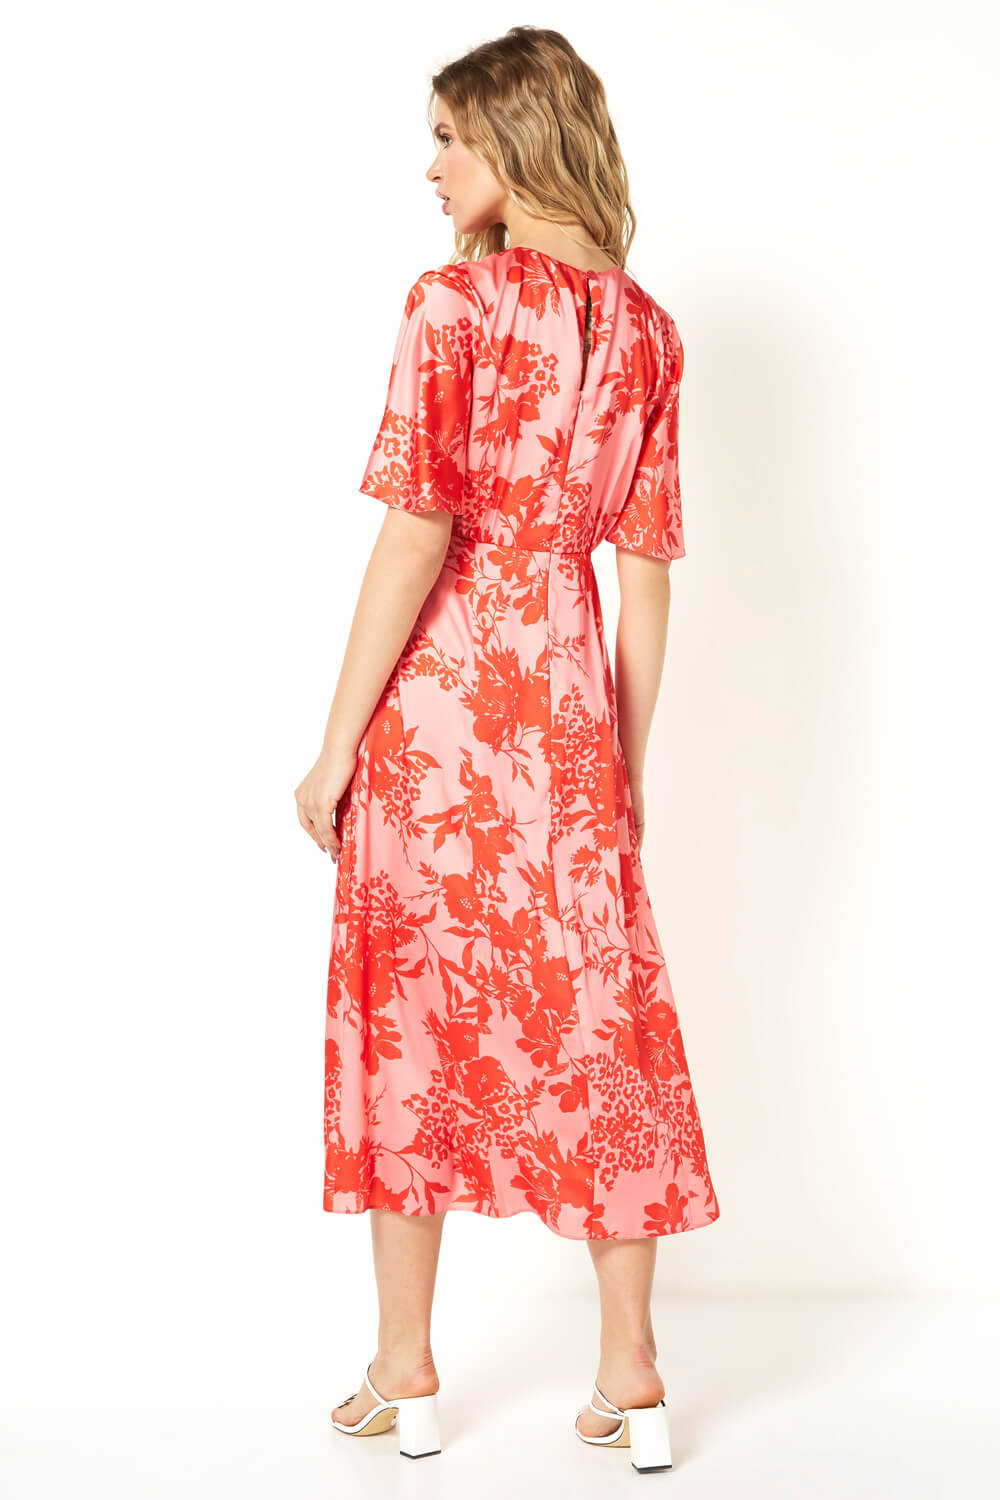 PINK Floral Print Oriental Midi Dress, Image 2 of 4